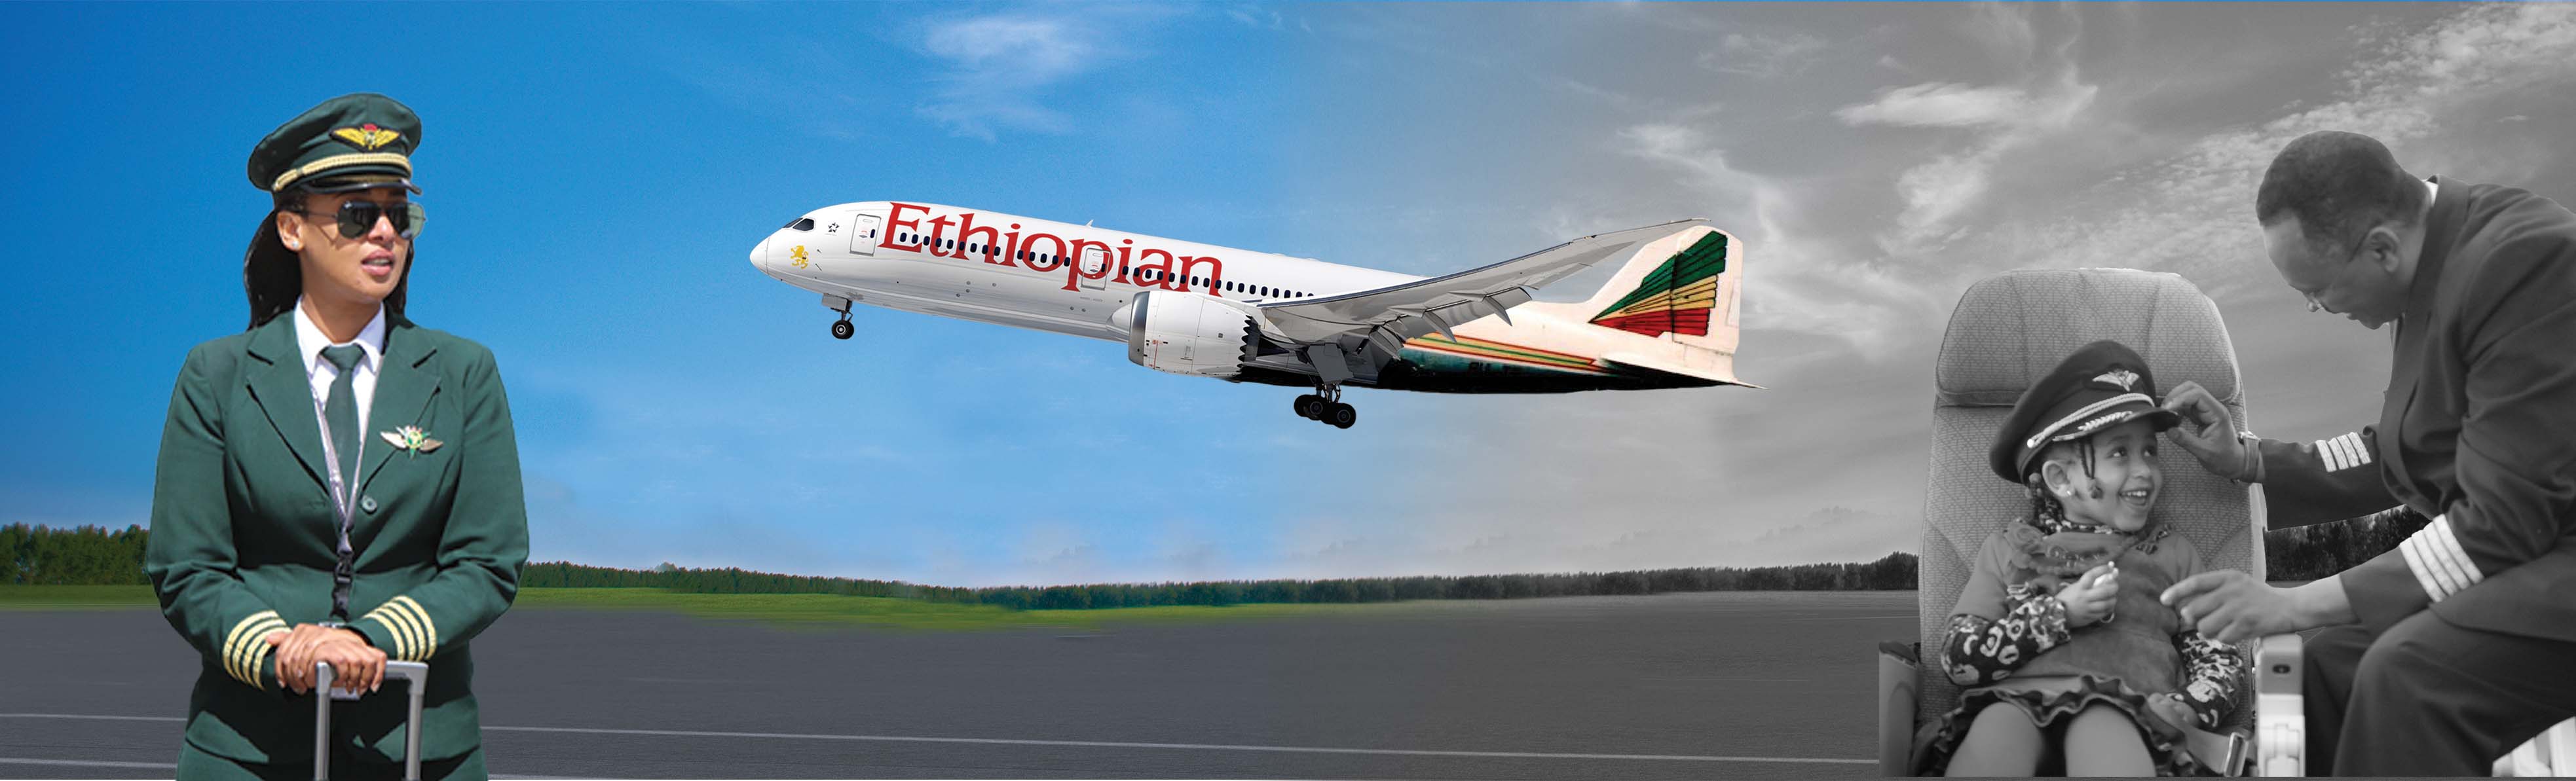 Ethiopia airlines history